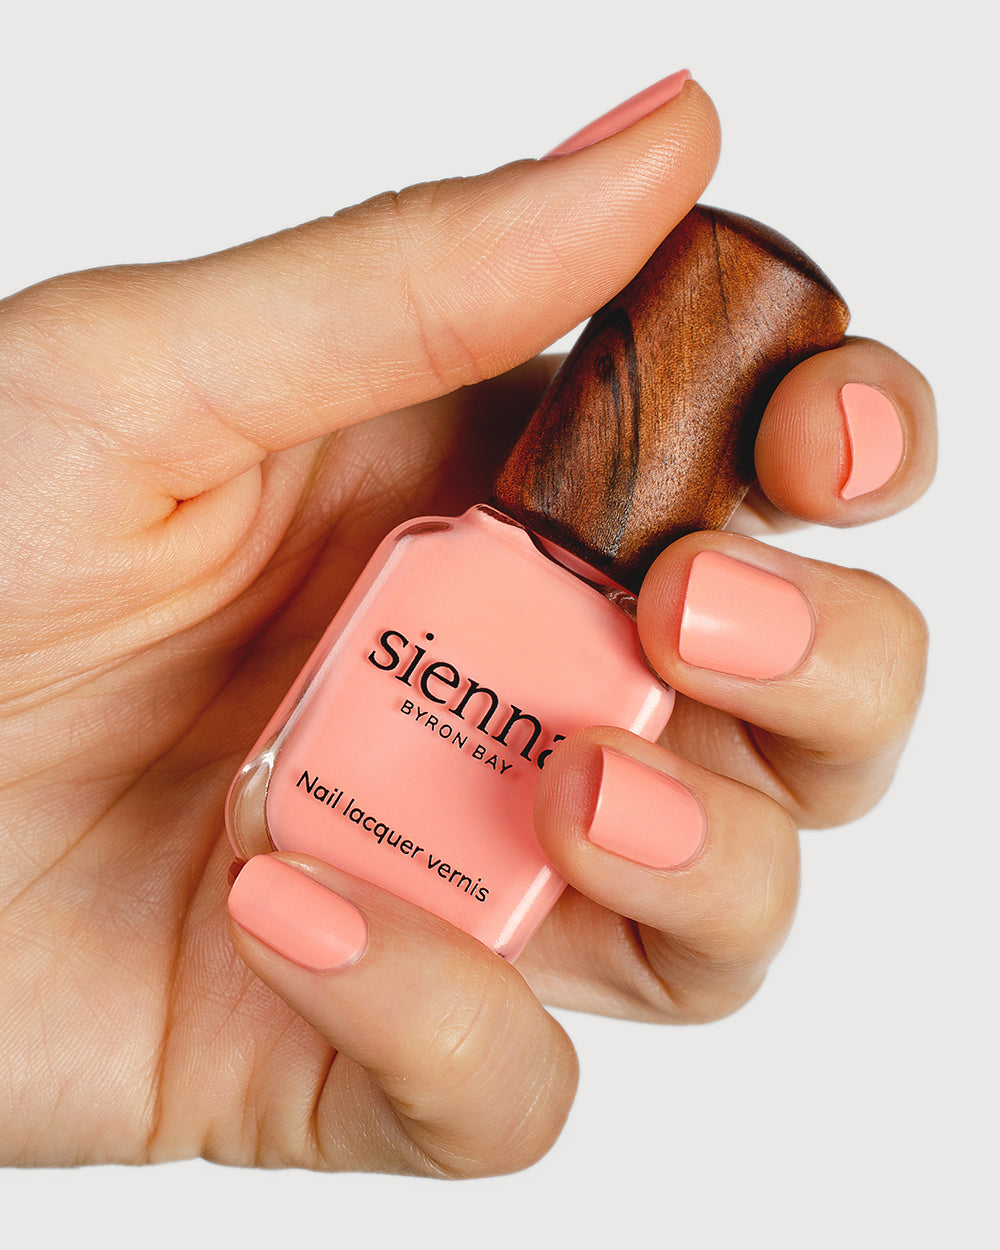 Vibrant peach nail polish hand swatch on fair skin tone holding sienna bottle